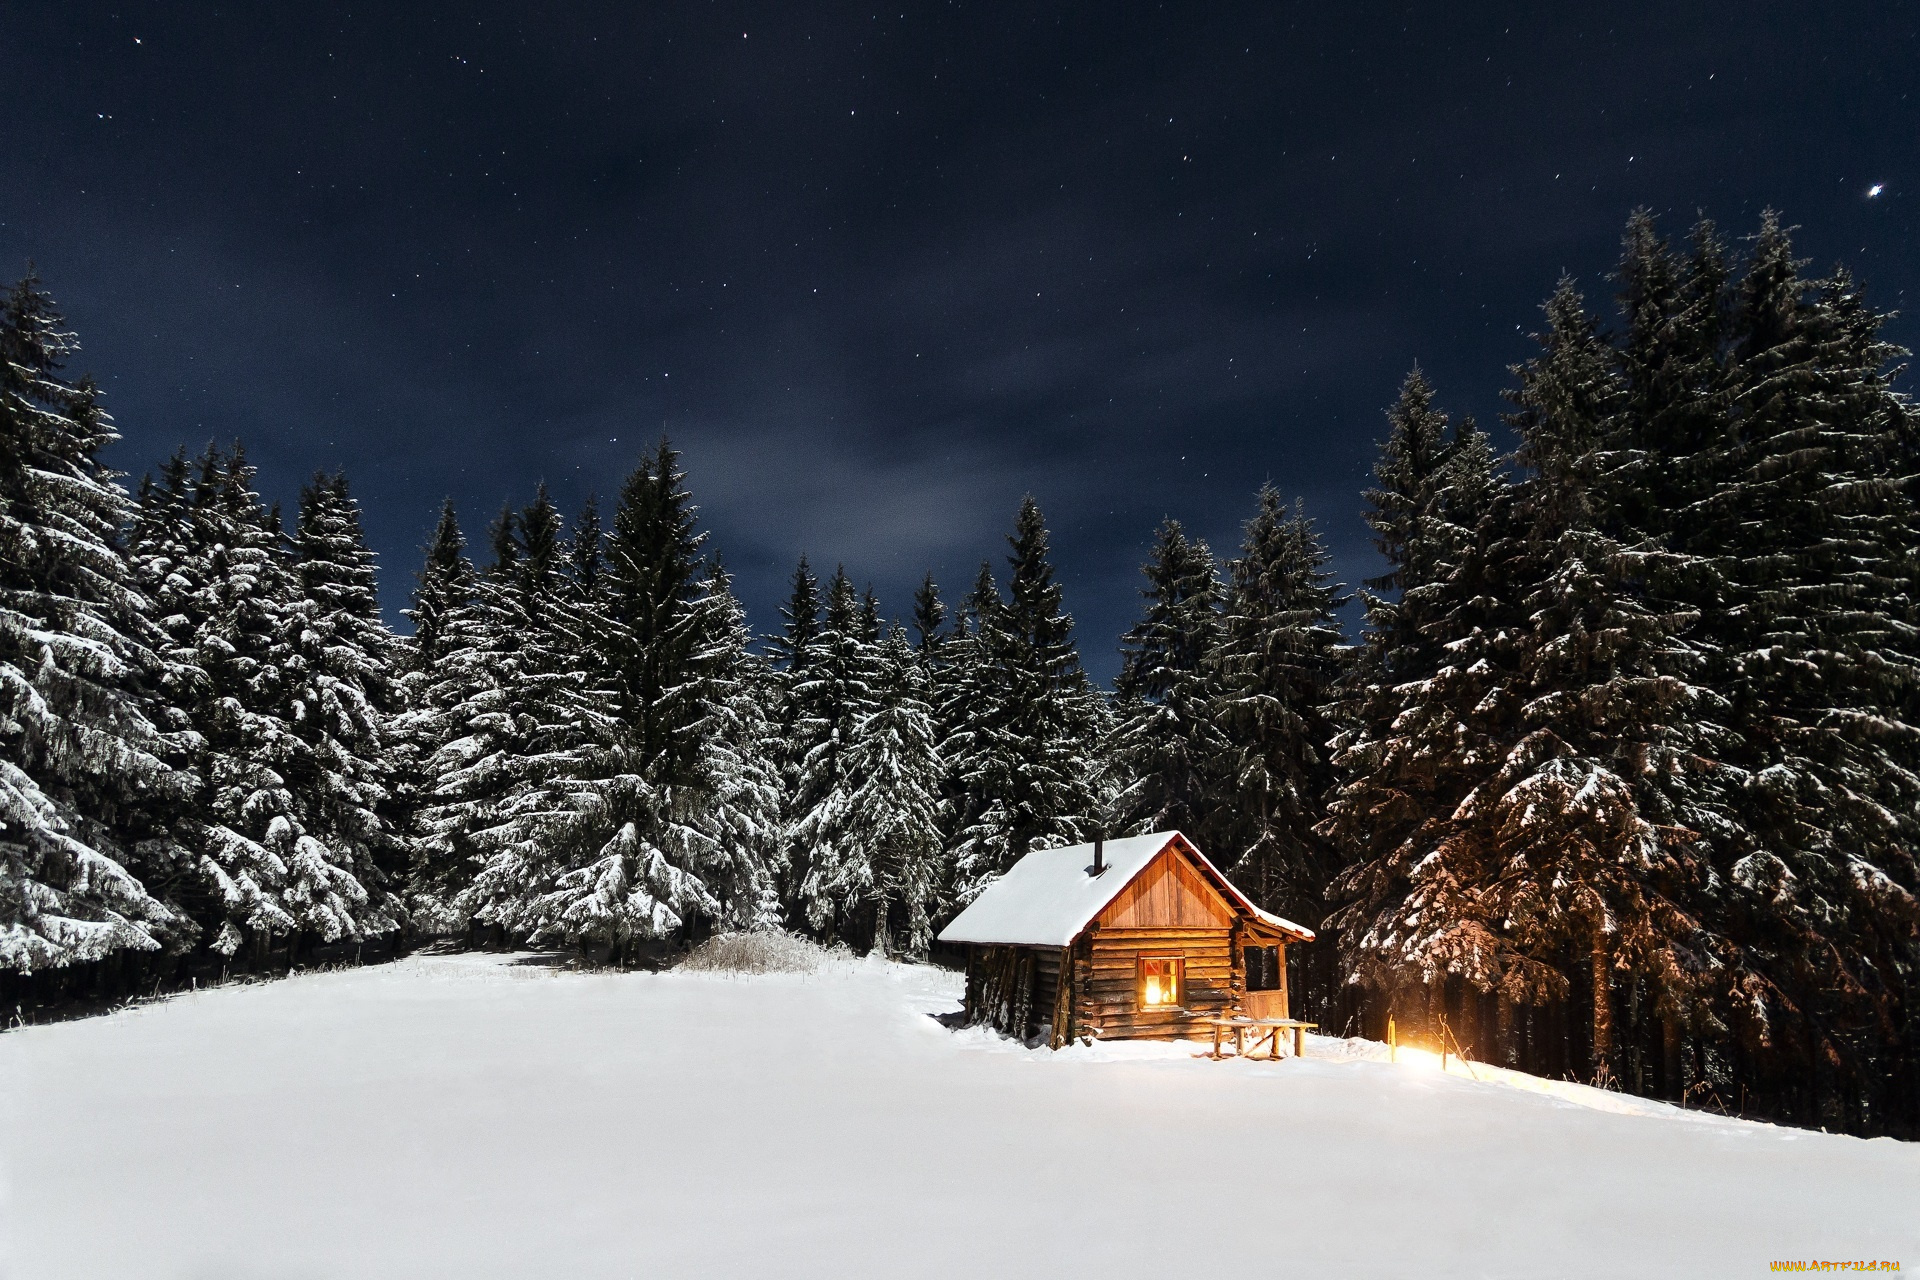 природа, зима, свет, деревья, дом, ночь, небо, изба, лес, звезды, опушка, снег